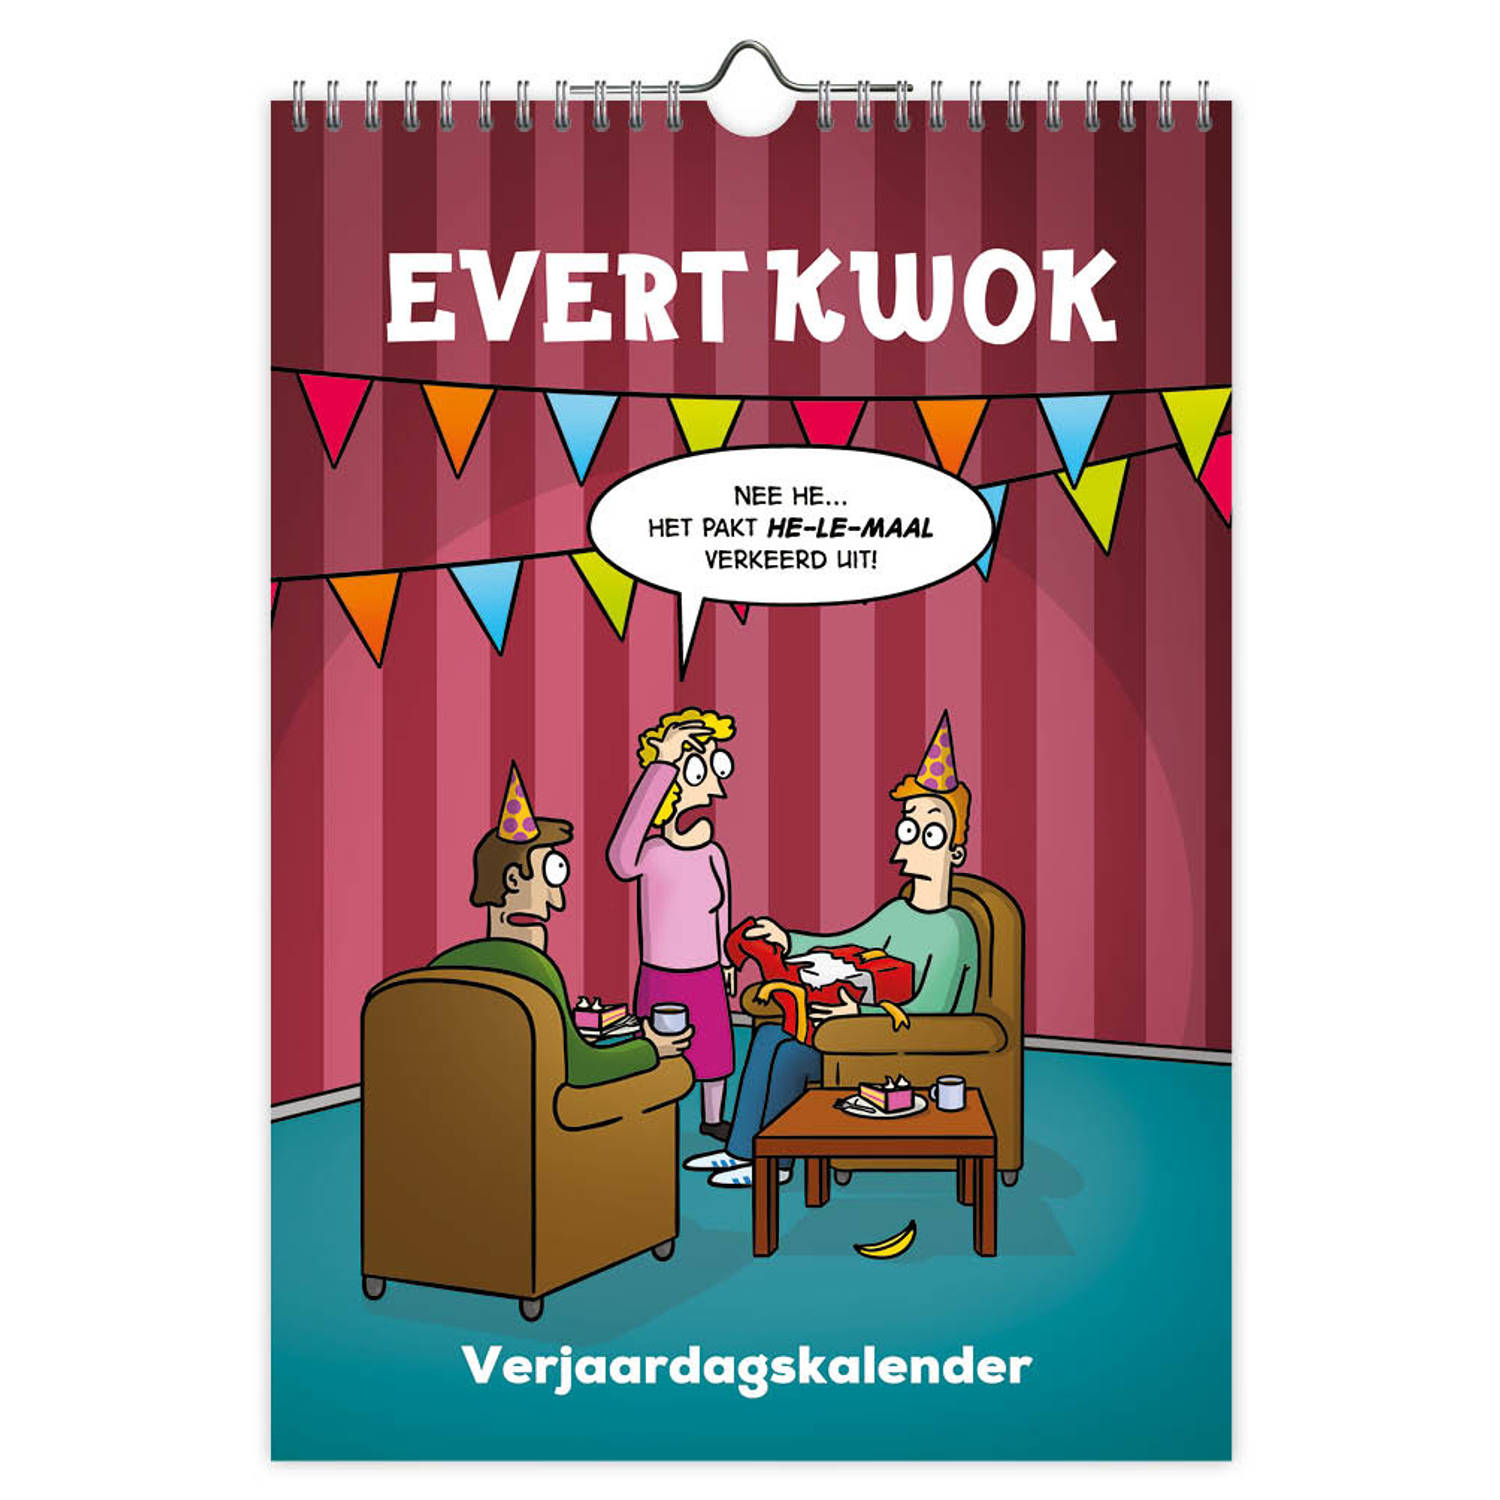 Evert Kwok A4 Verjaardagskalender